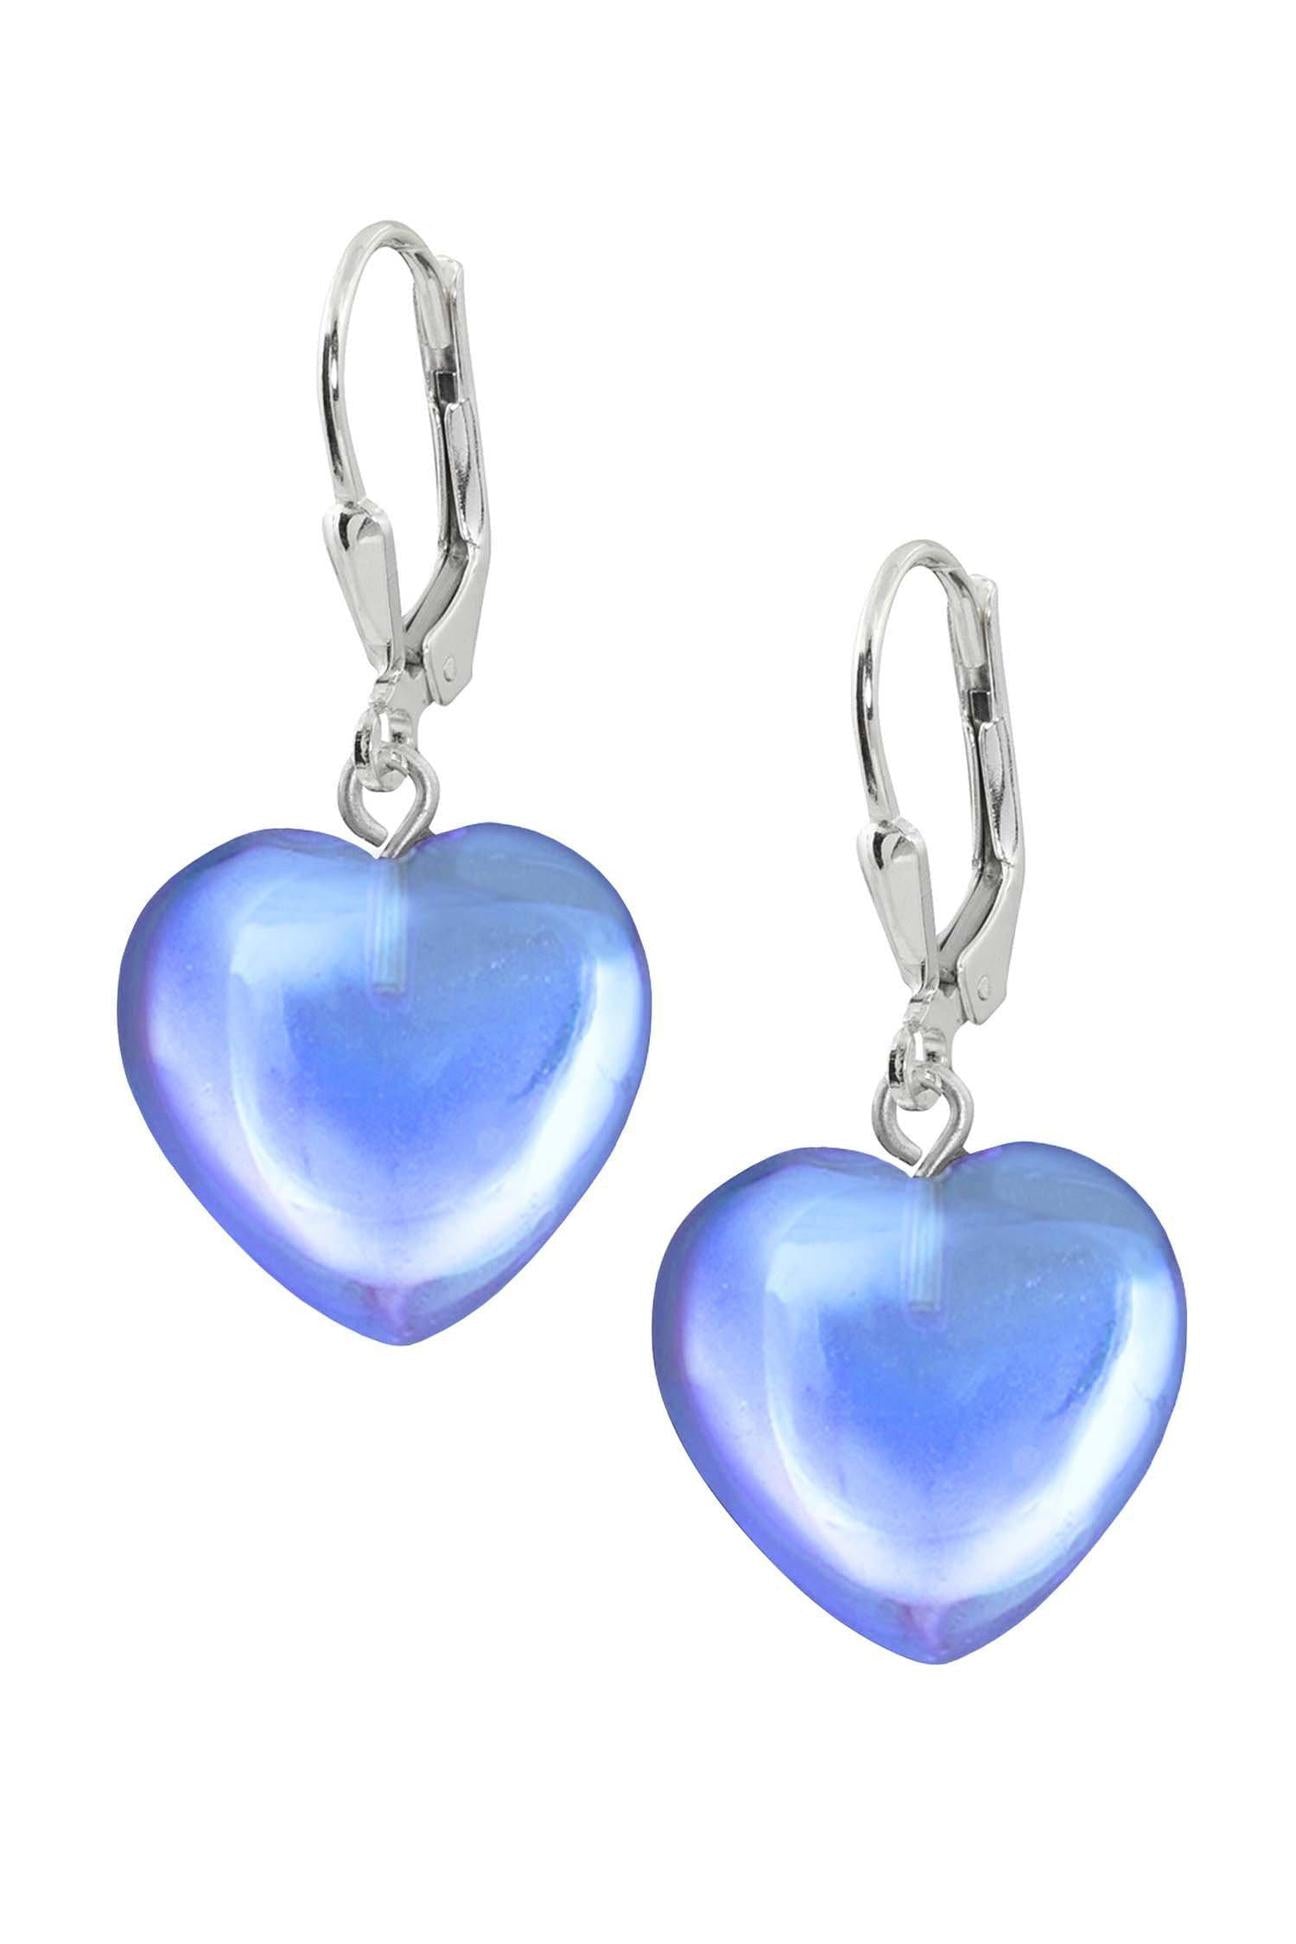 Leightworks Crystal Heart Earrings